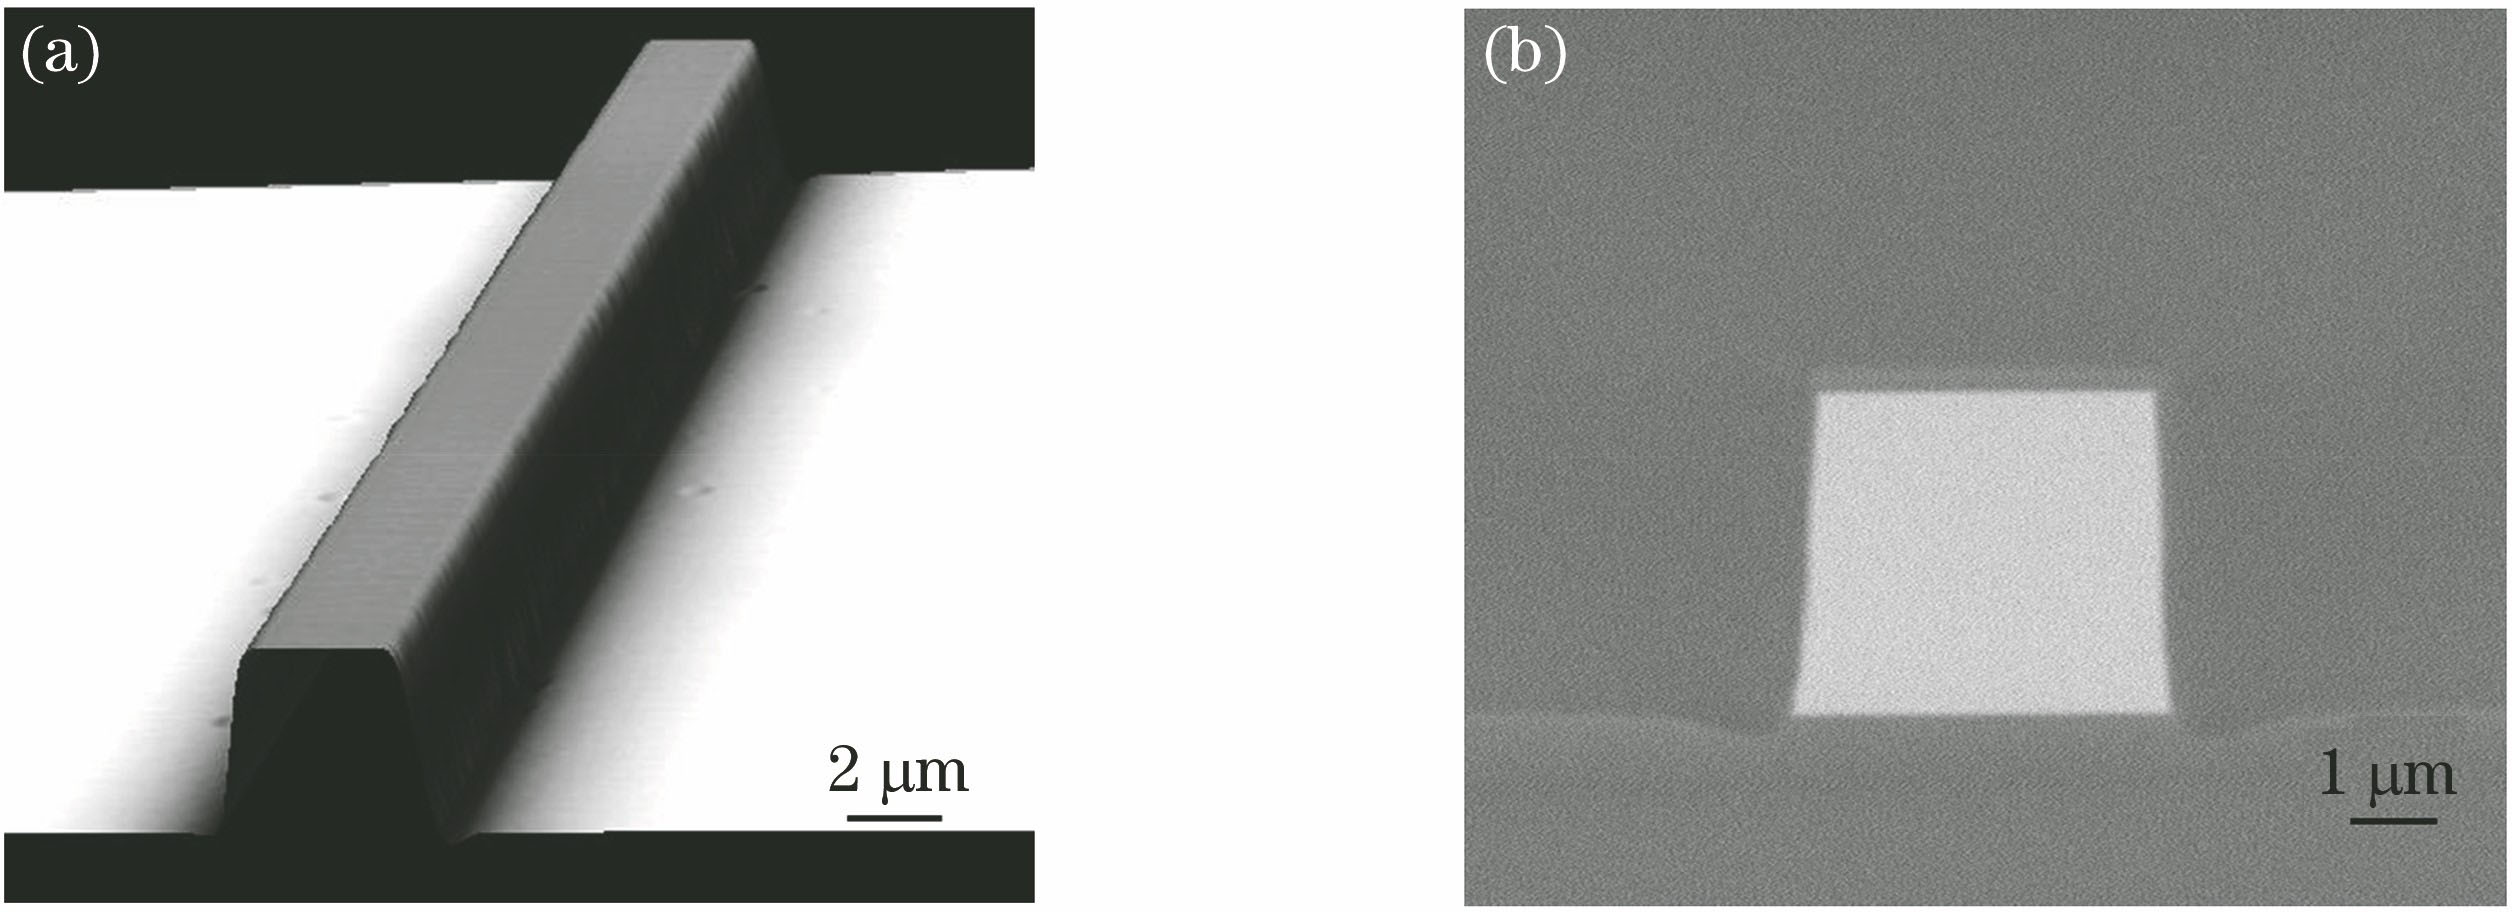 Morphology photos of rectangular waveguide. (a) Optical microscope photograph; (b) SEM image